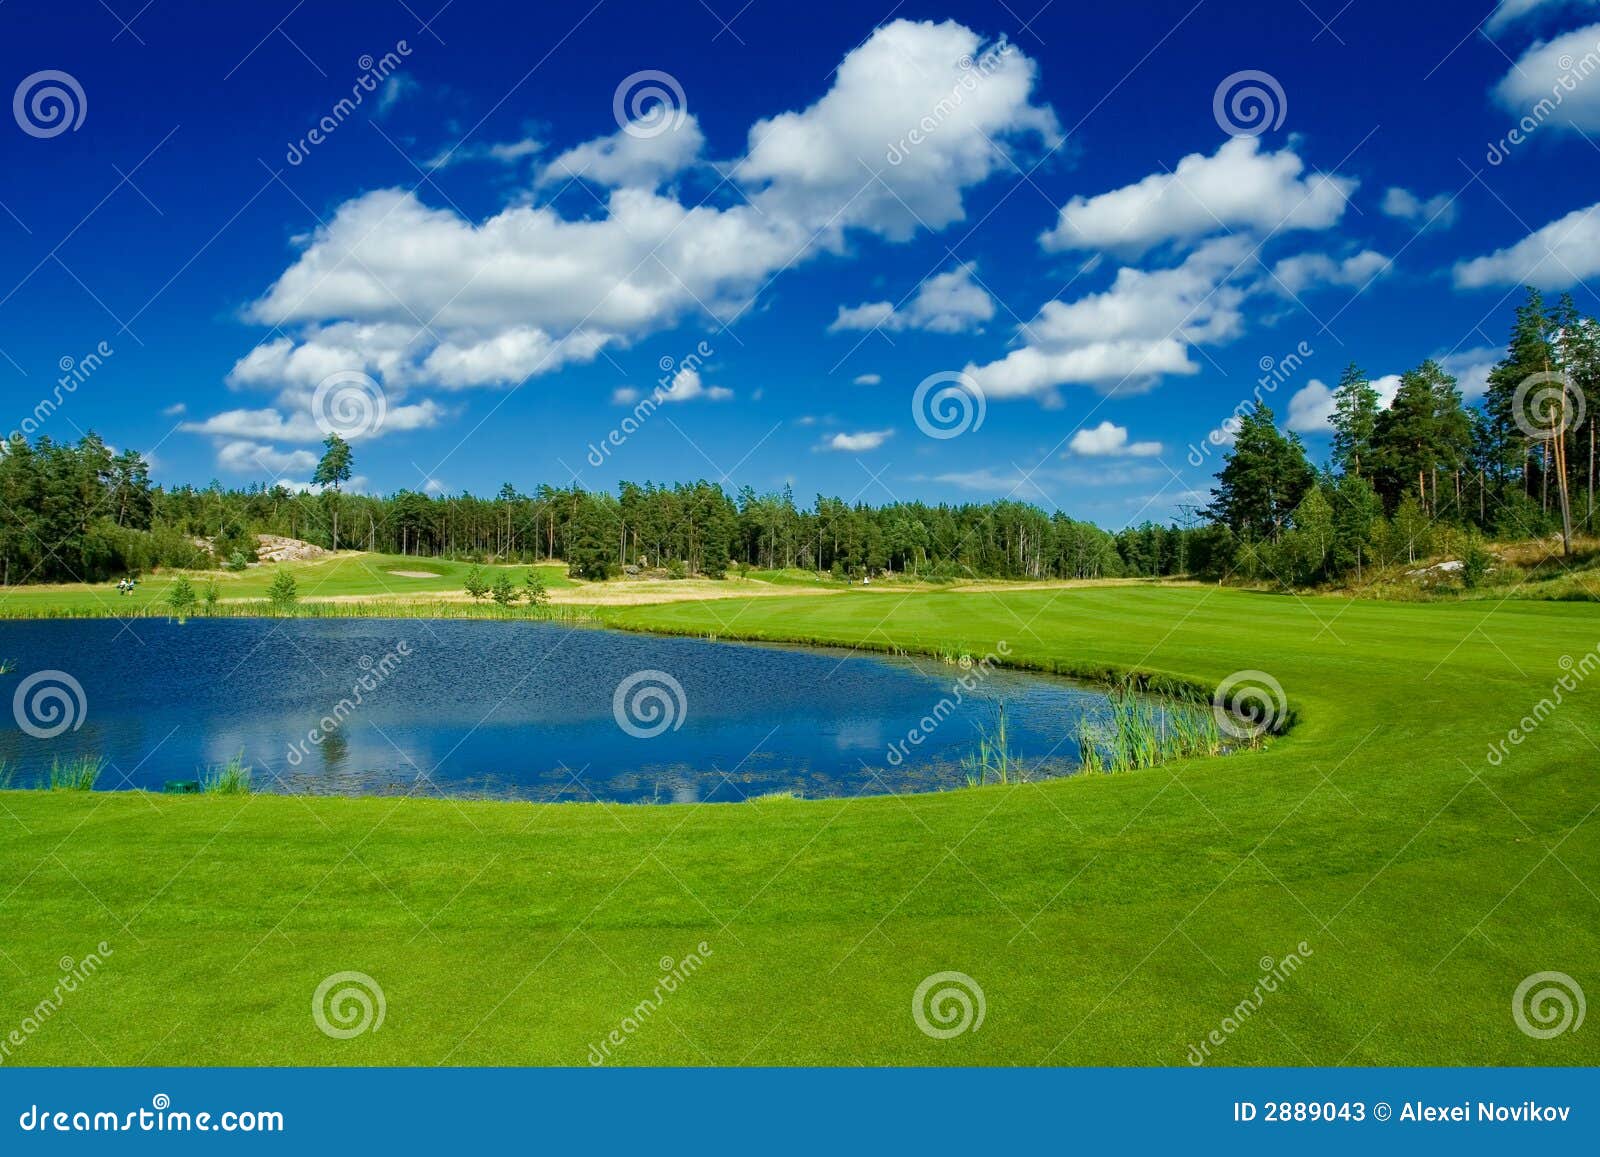 free clipart golf fairway - photo #14